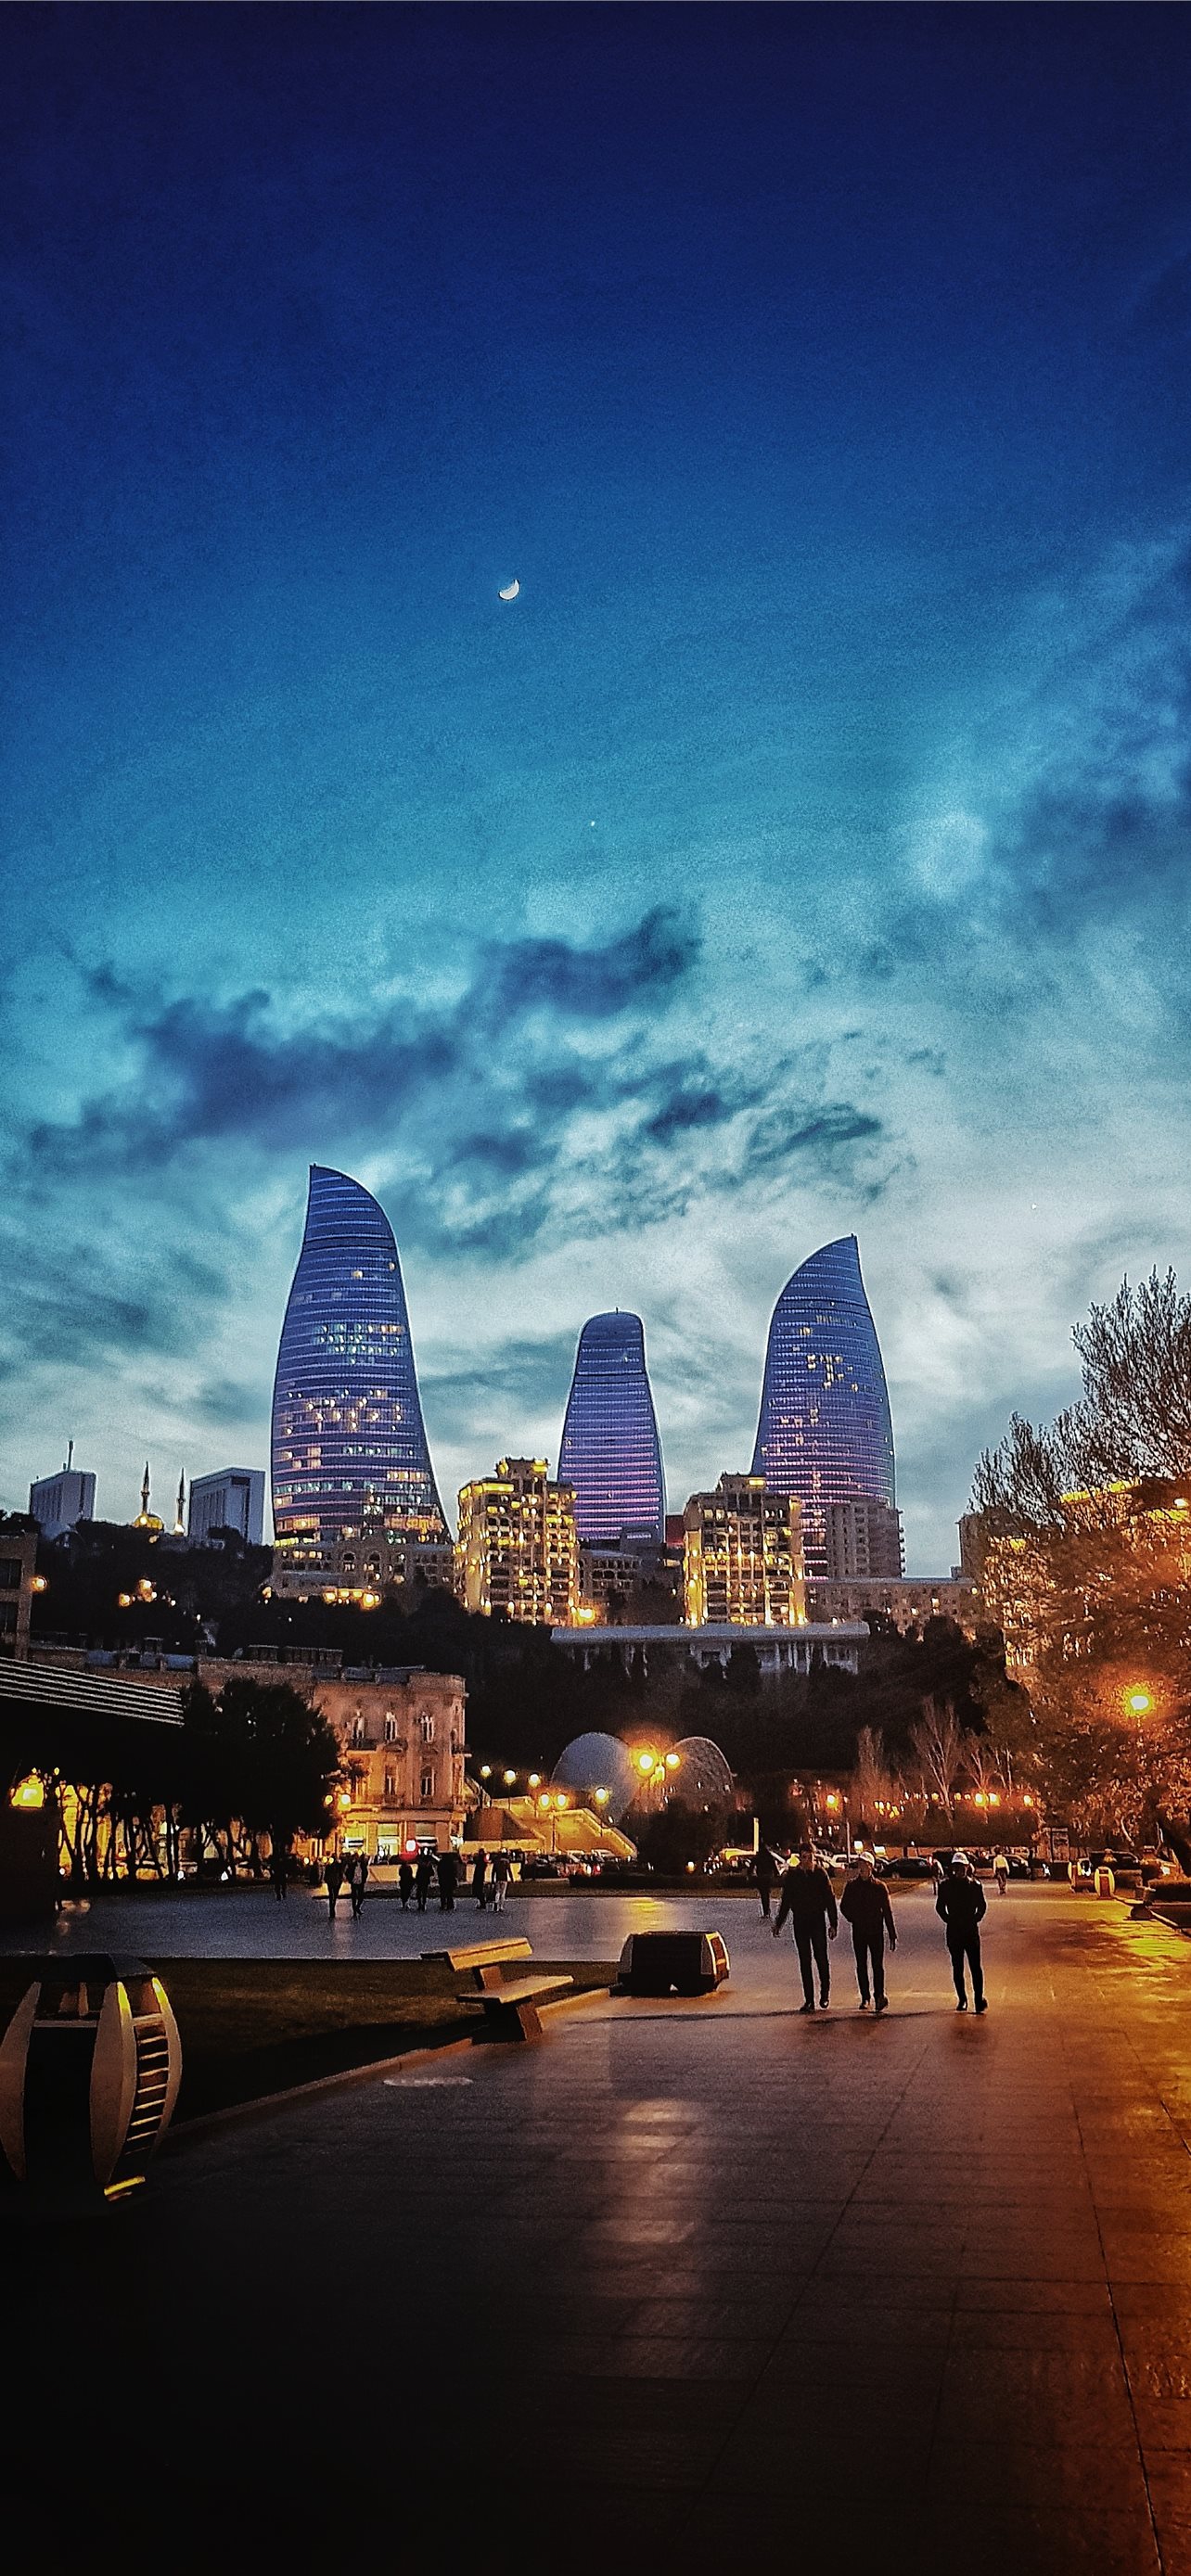 5,357 Baku Flame Towers Images, Stock Photos & Vectors | Shutterstock